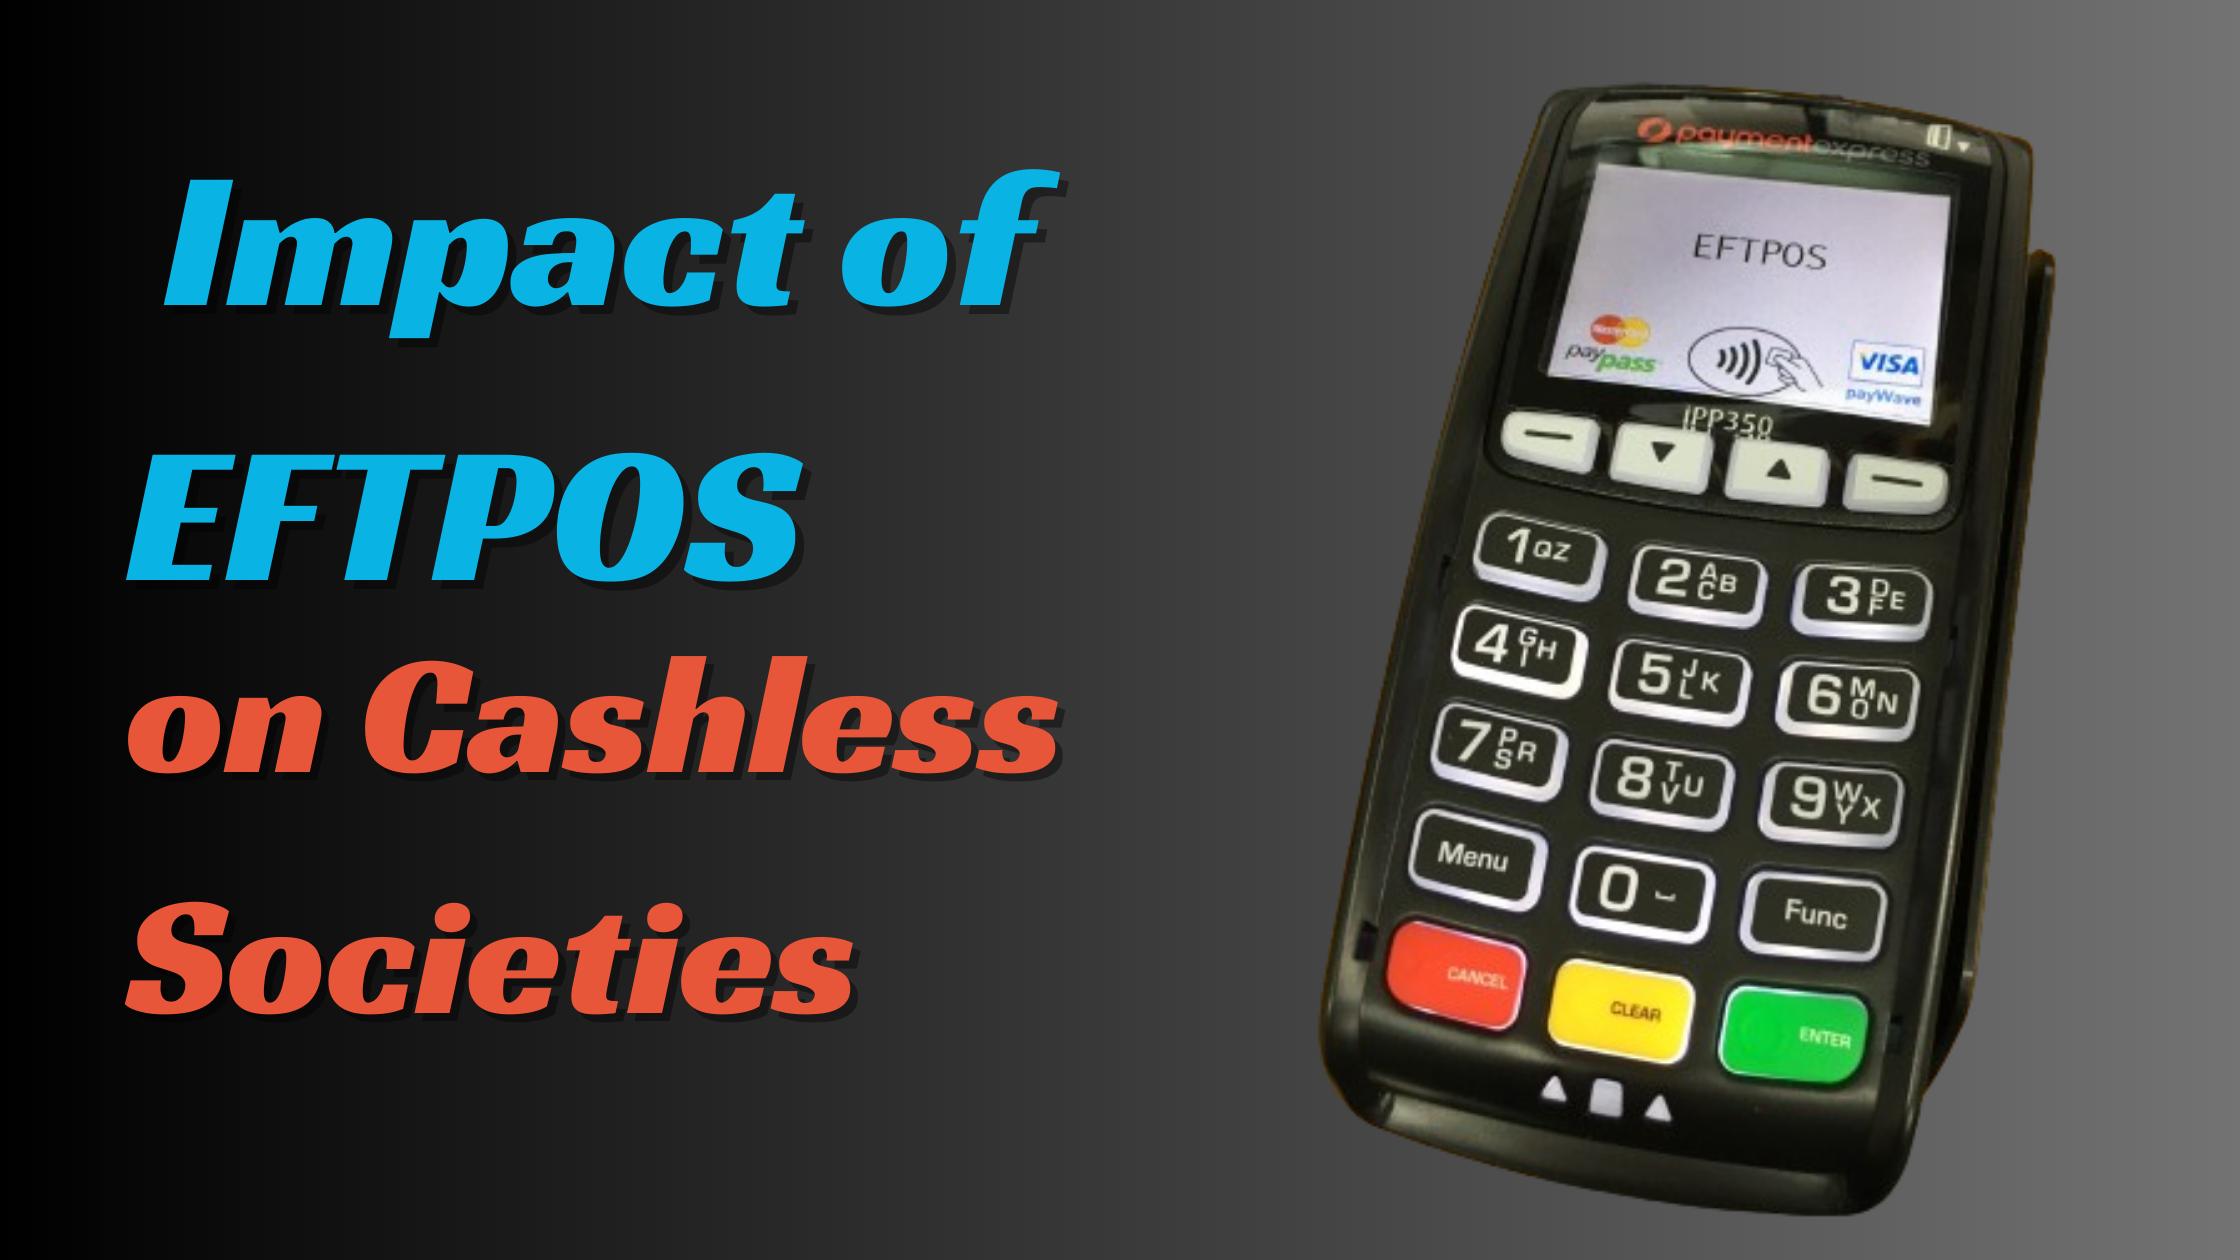 The Impact of EFTPOS on Cashless Societies